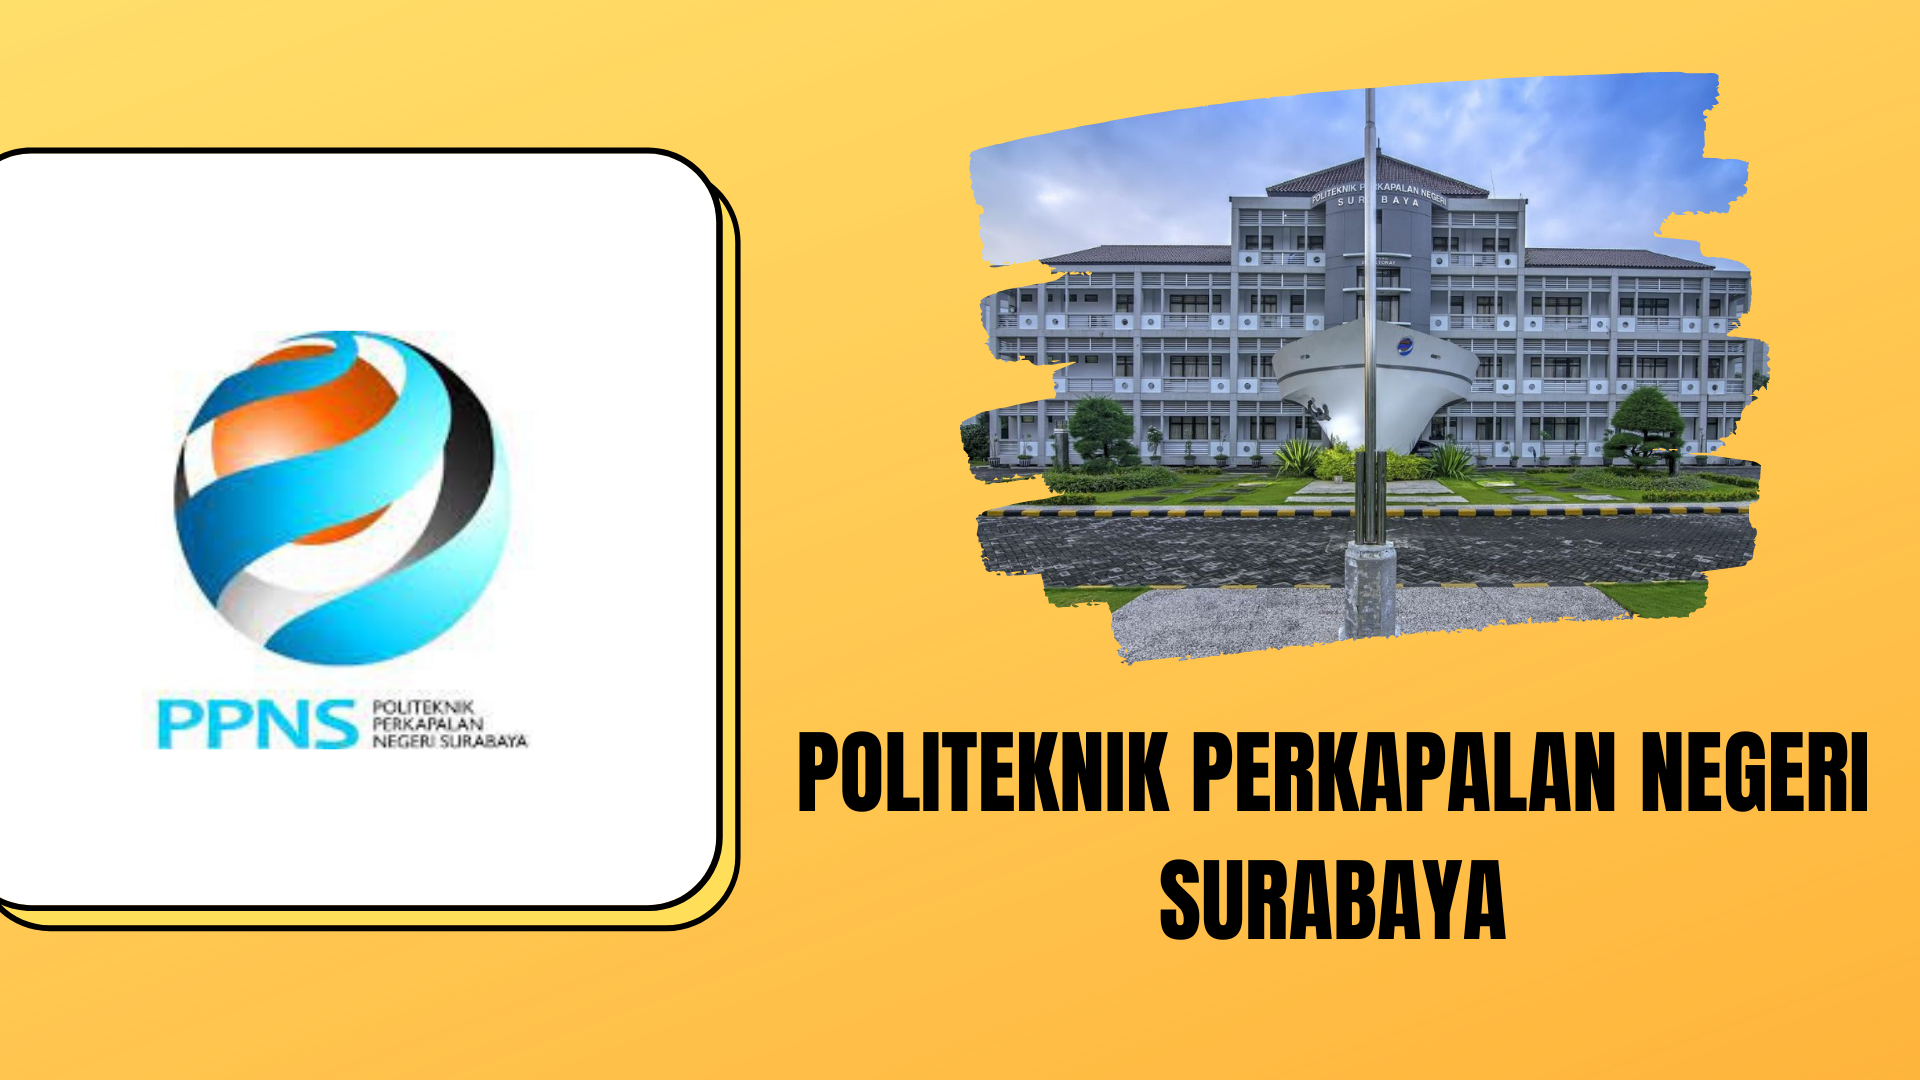 Tentang PPNS (Politeknik Perkapalan Negeri Surabaya)